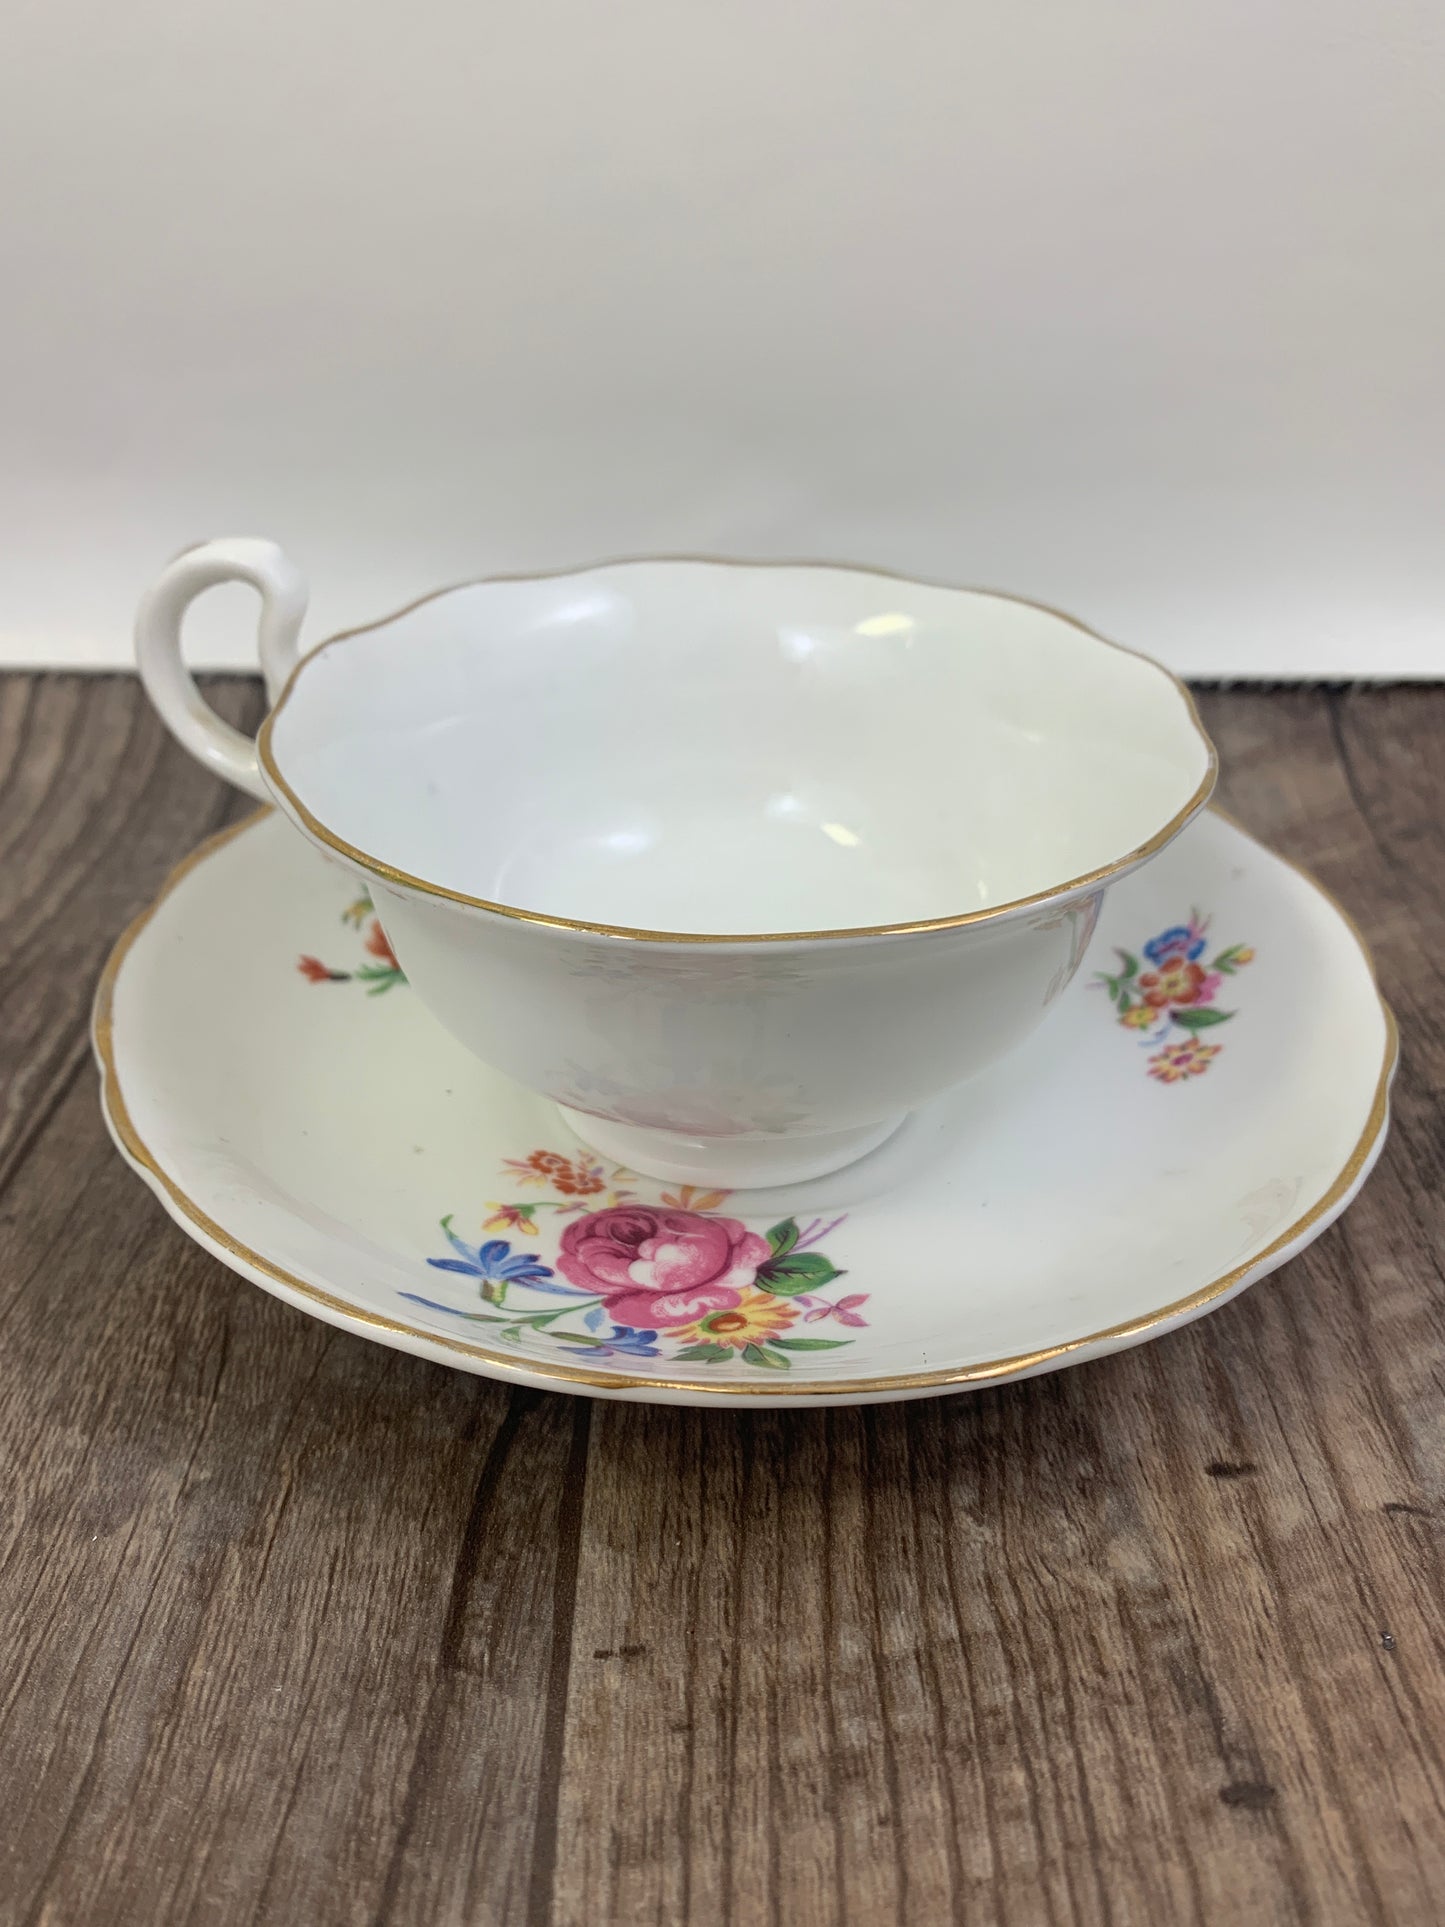 Vintage Teacup with Floral Pattern Wide Mouth Tea Cup Radford Bone